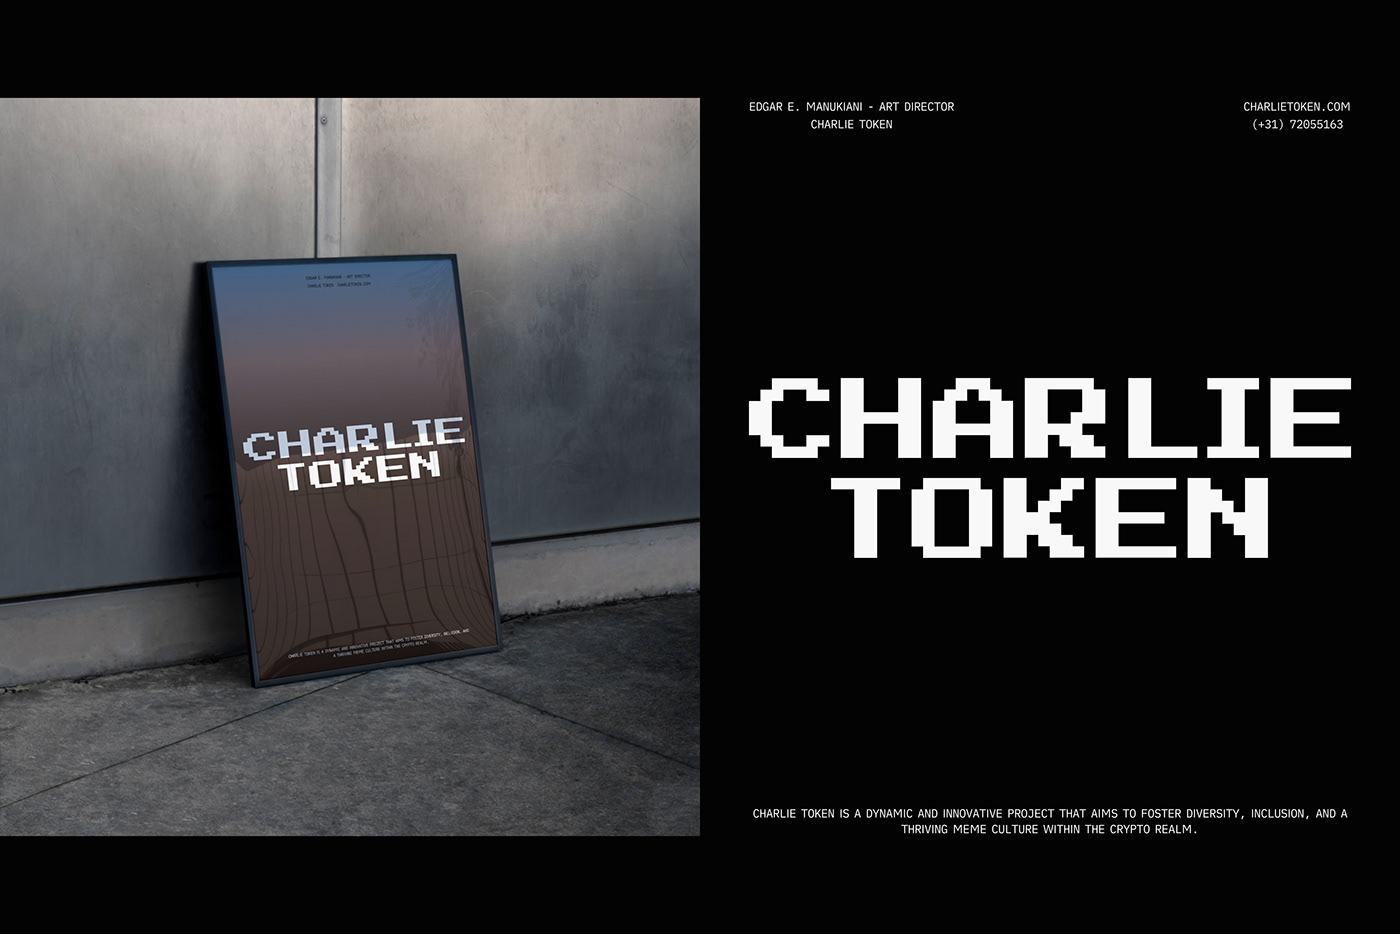 Meme Charlie animation  Webdesign black and white ILLUSTRATION  cryptocurrency brand identity Logo Design logo